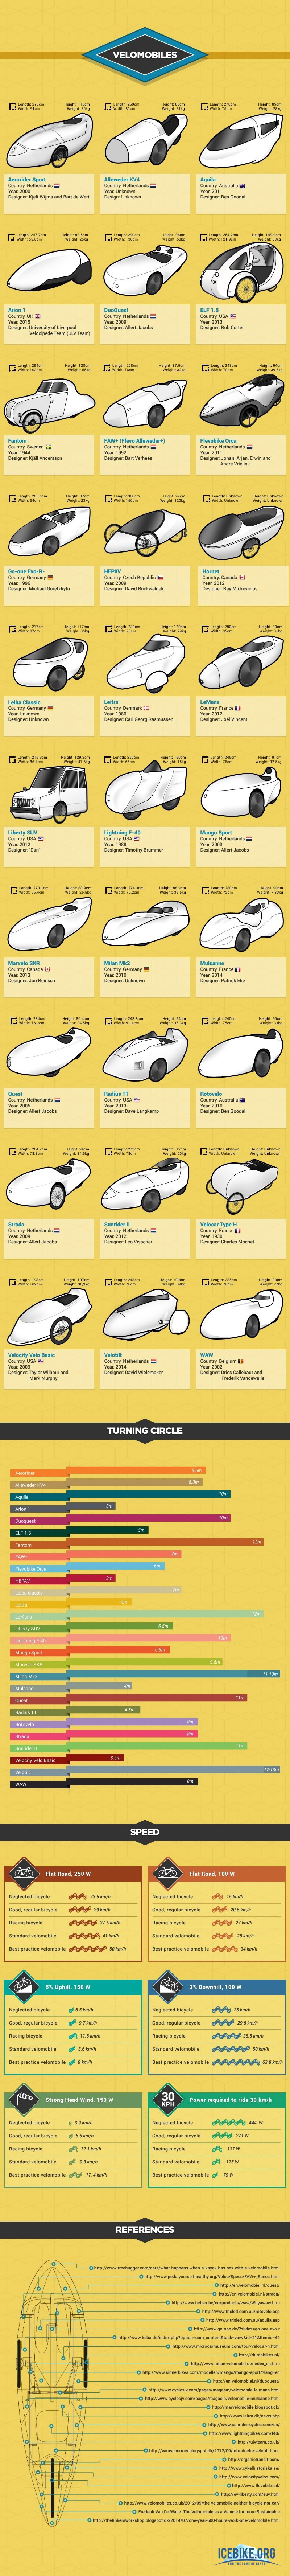 30 iconic velomobile designs